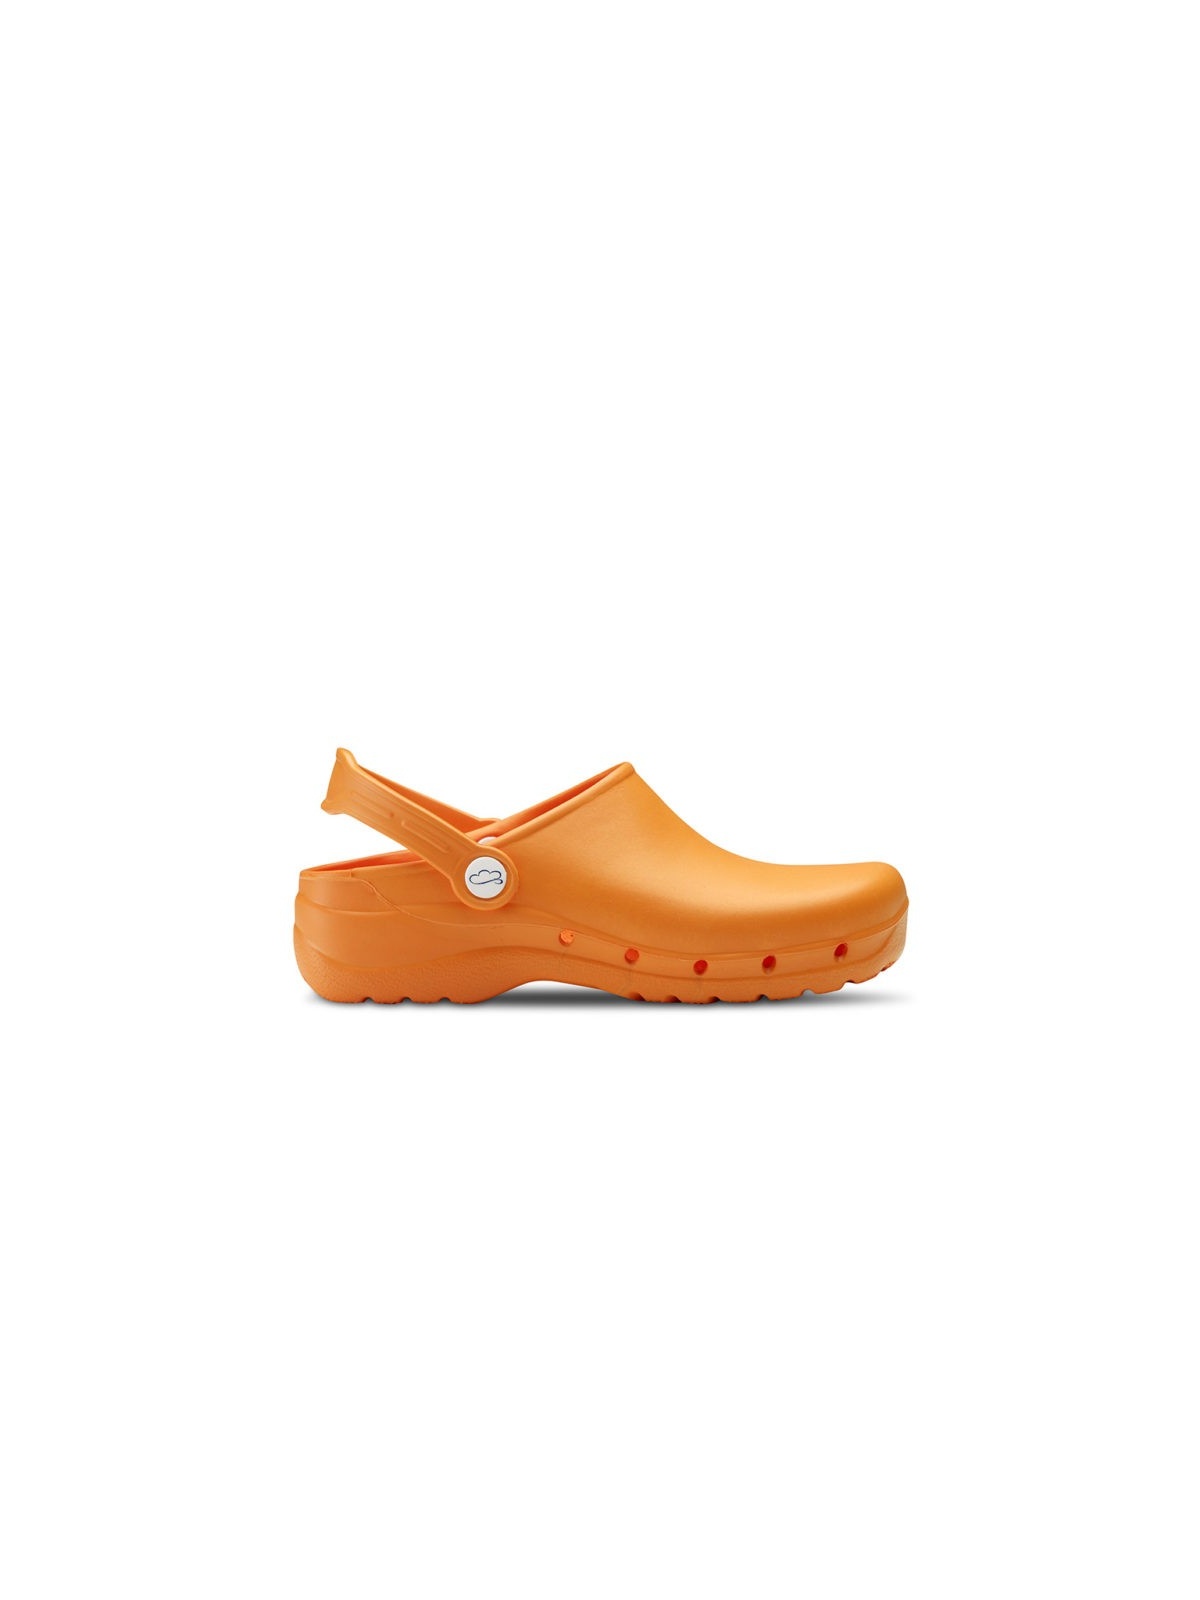 Vista lateral zueco flotante naranja Feliz Caminar